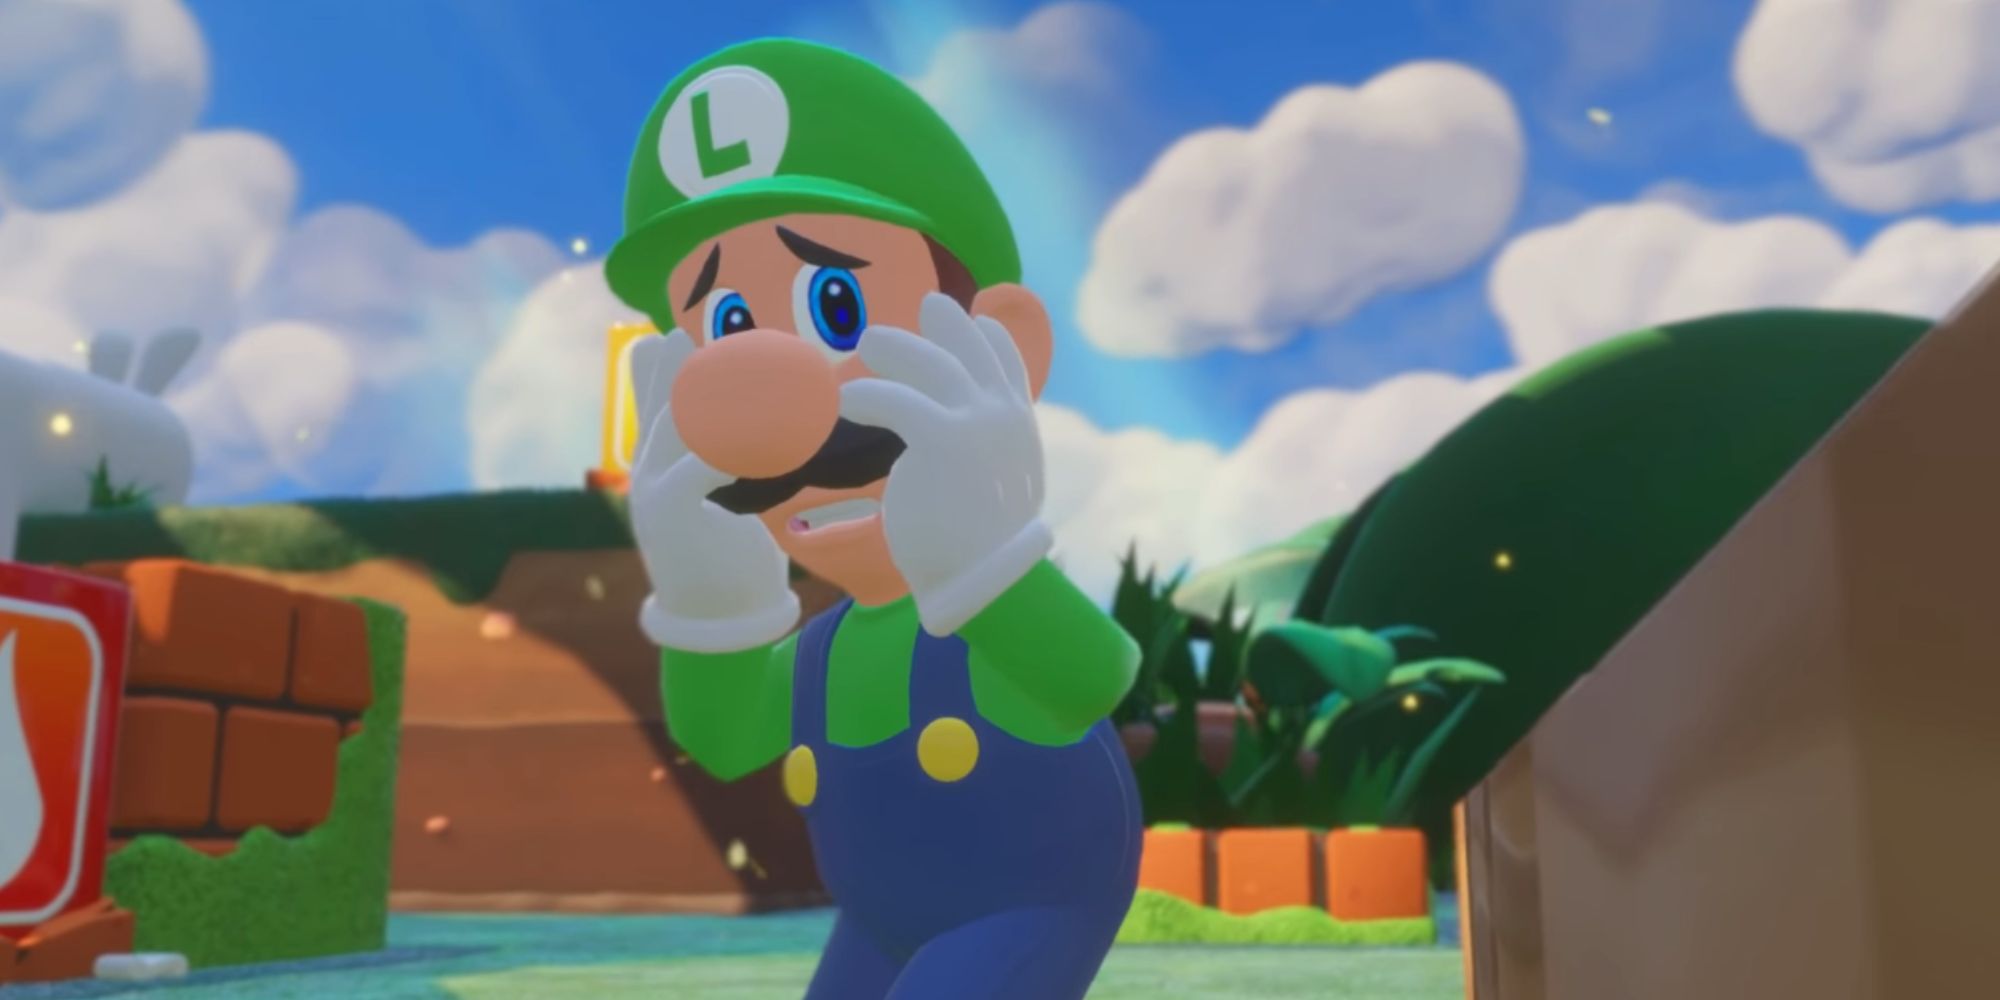 Luigi looks terrified in a open area